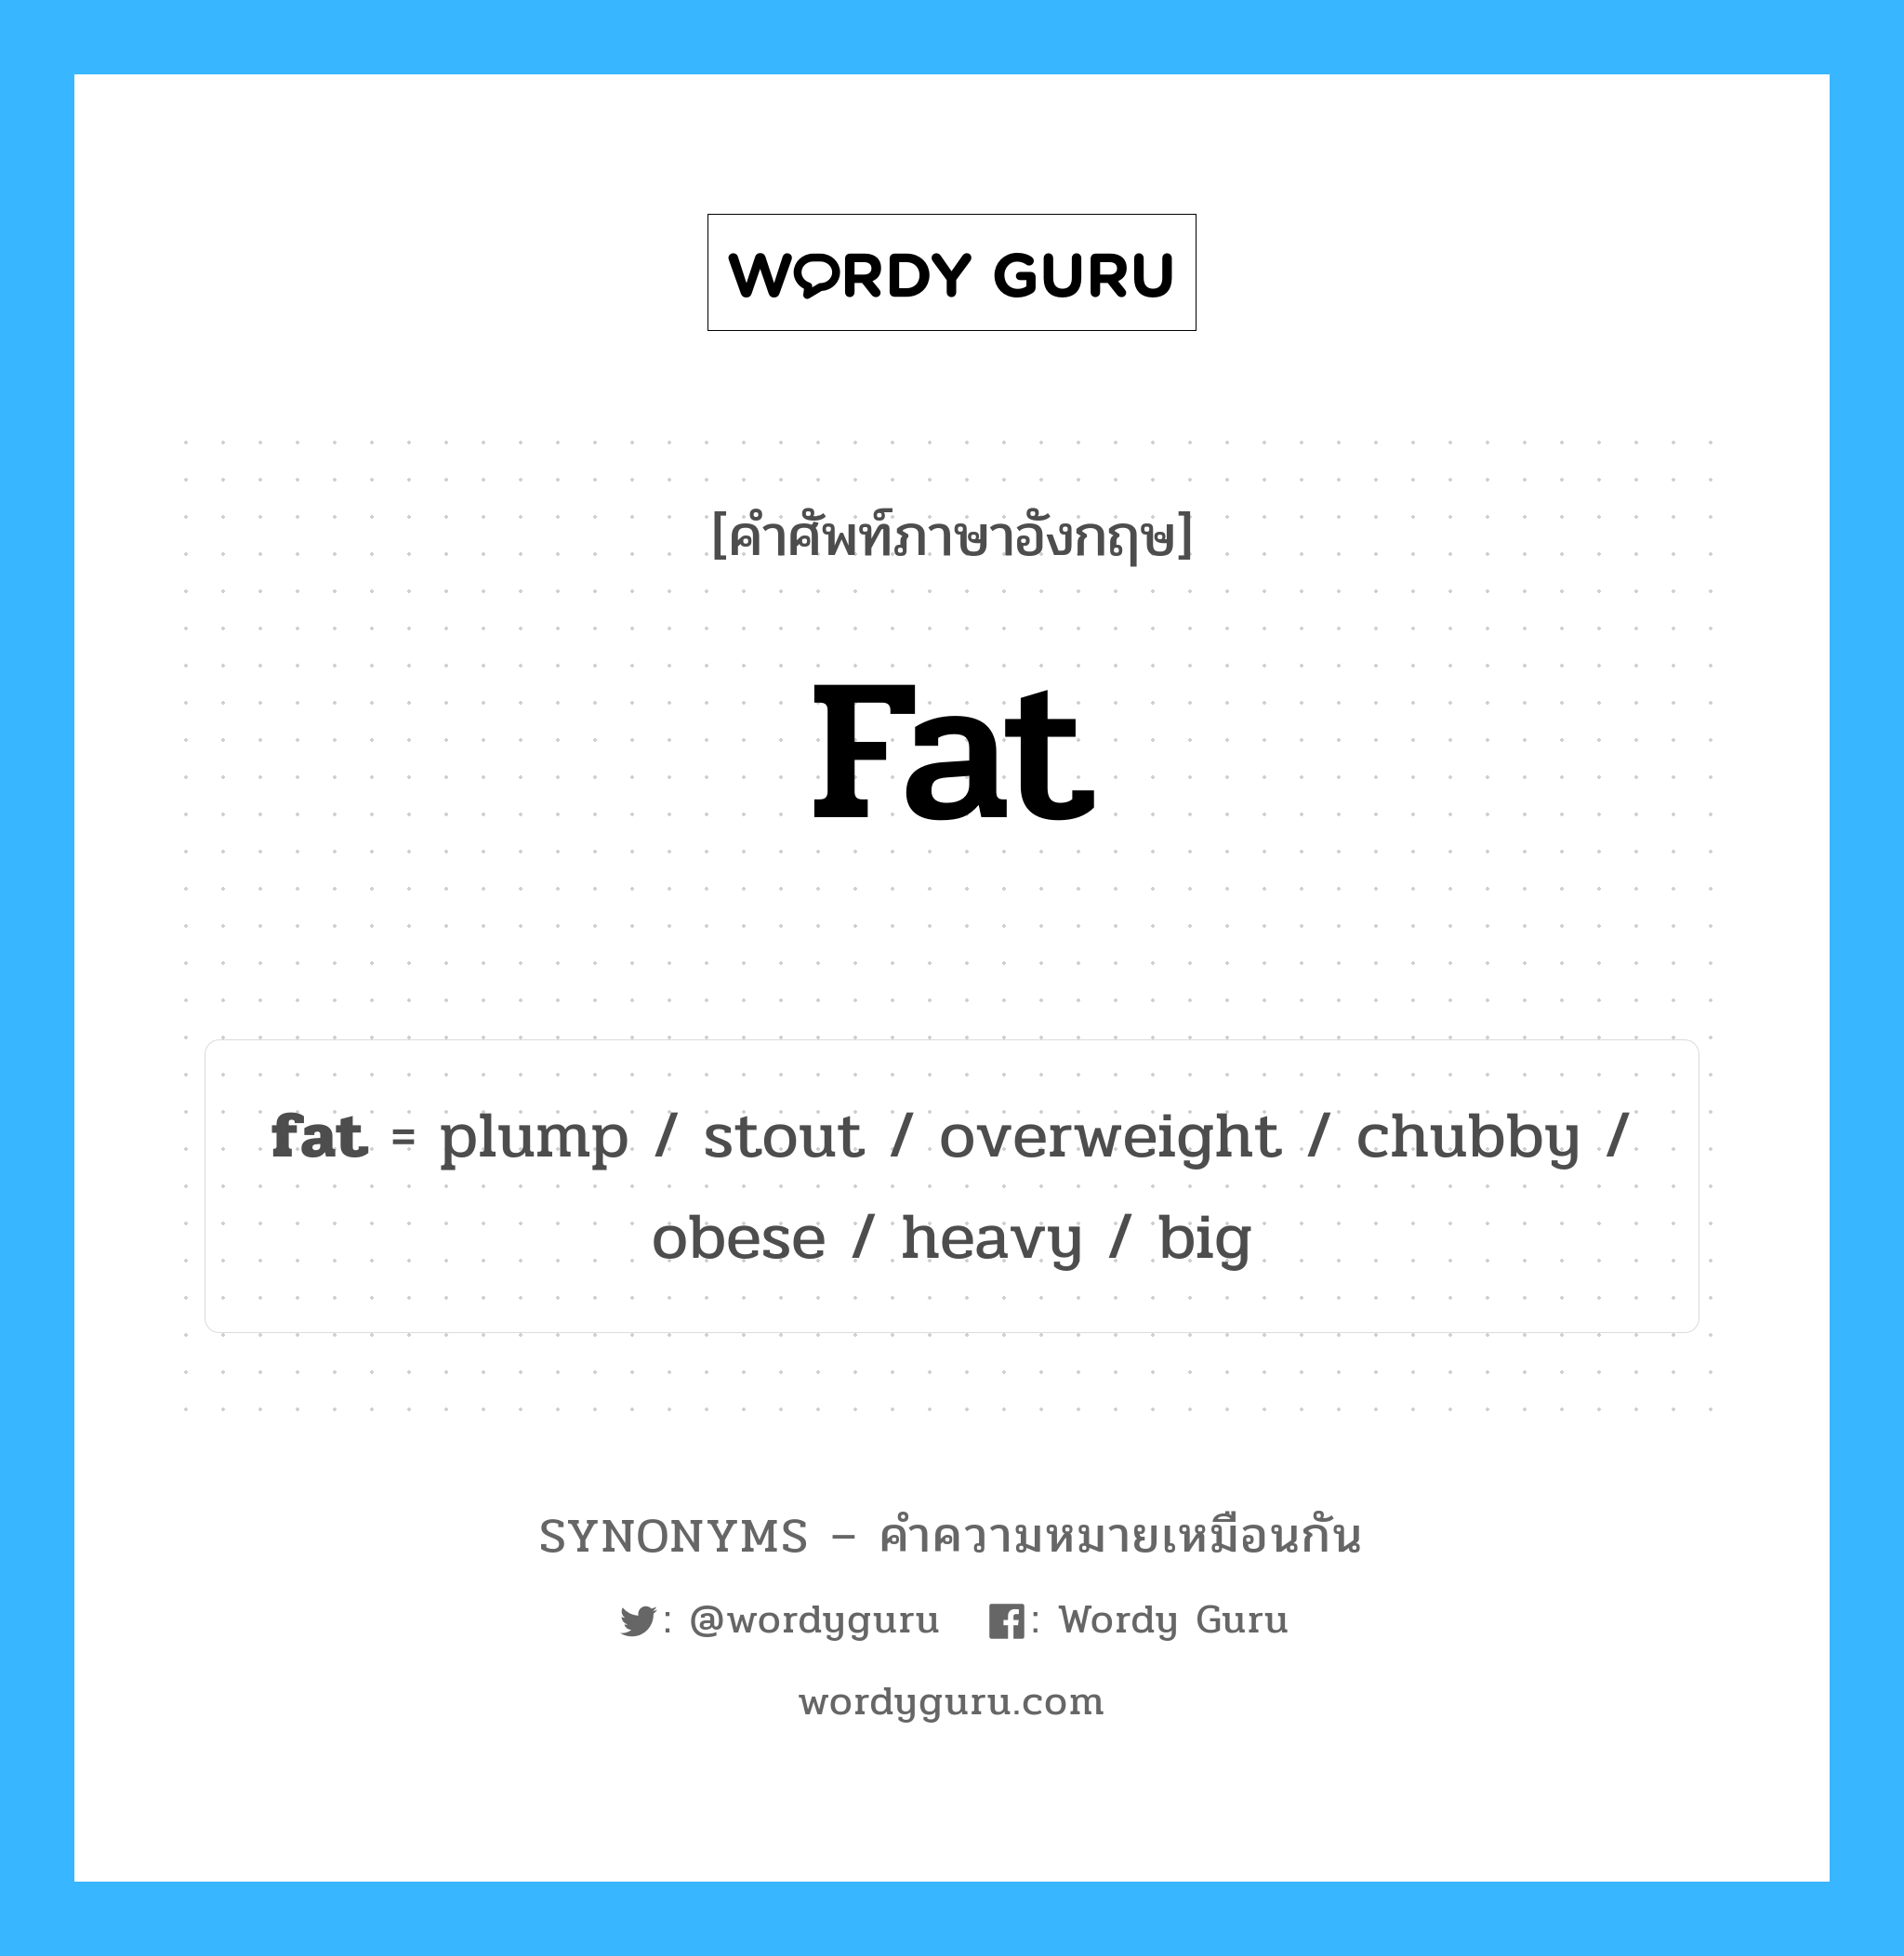 overweight เป็นหนึ่งใน fat และมีคำอื่น ๆ อีกดังนี้, คำศัพท์ภาษาอังกฤษ overweight ความหมายคล้ายกันกับ fat แปลว่า ภาวะน้ำหนักเกิน หมวด fat